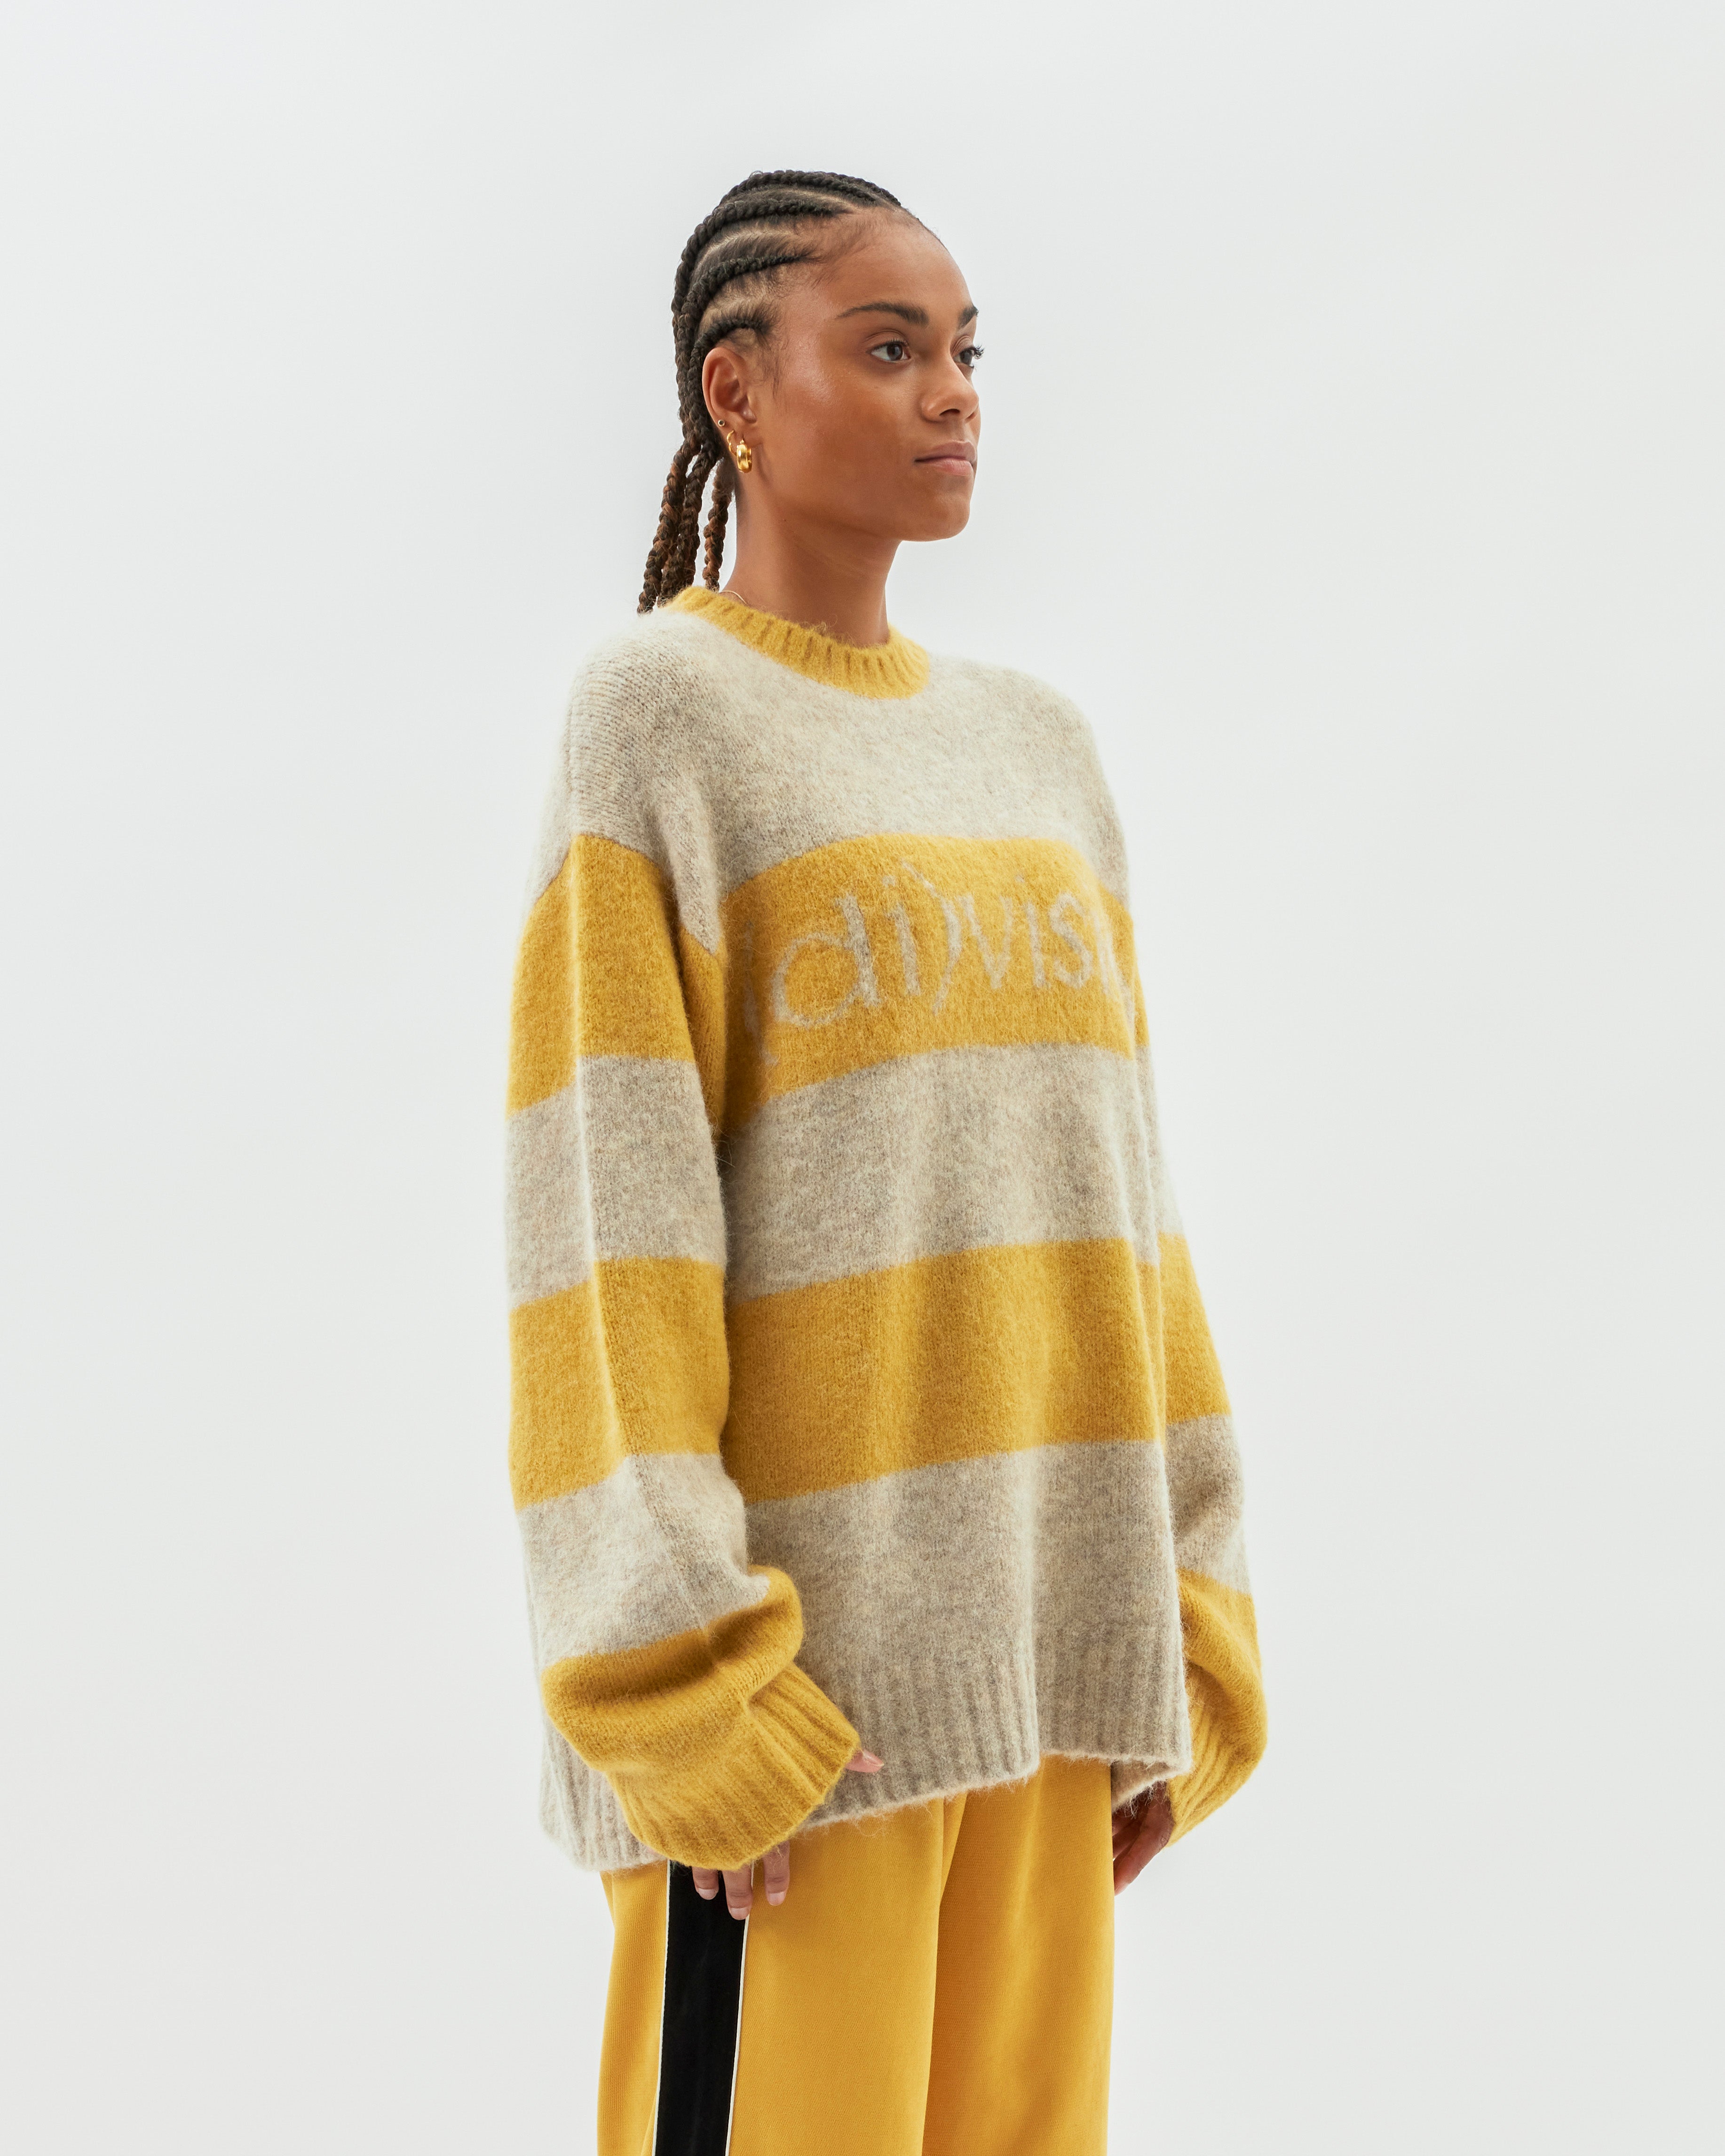 (di)vision Striped Logo Knit Sweater YELLOW / WHITE STRIPE 130002-3